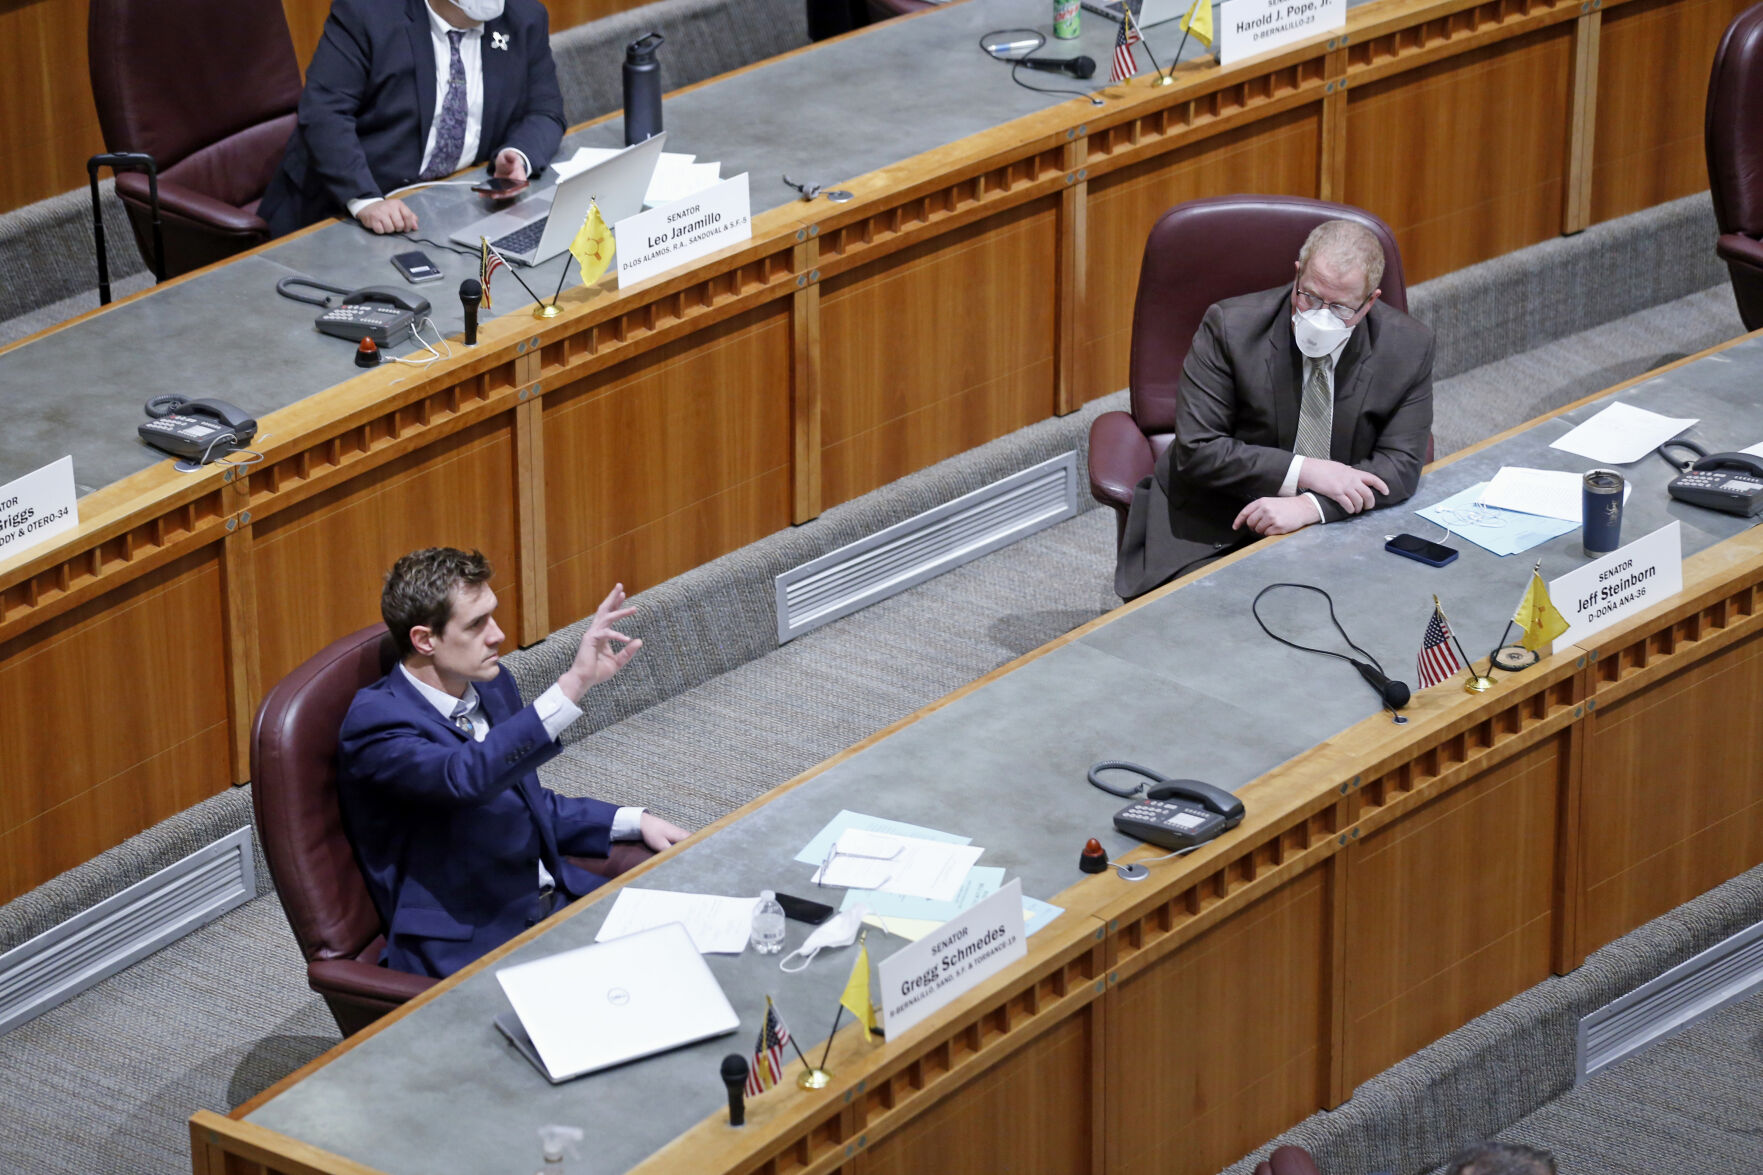 Senate adopts rules for legislative session amid mask debate